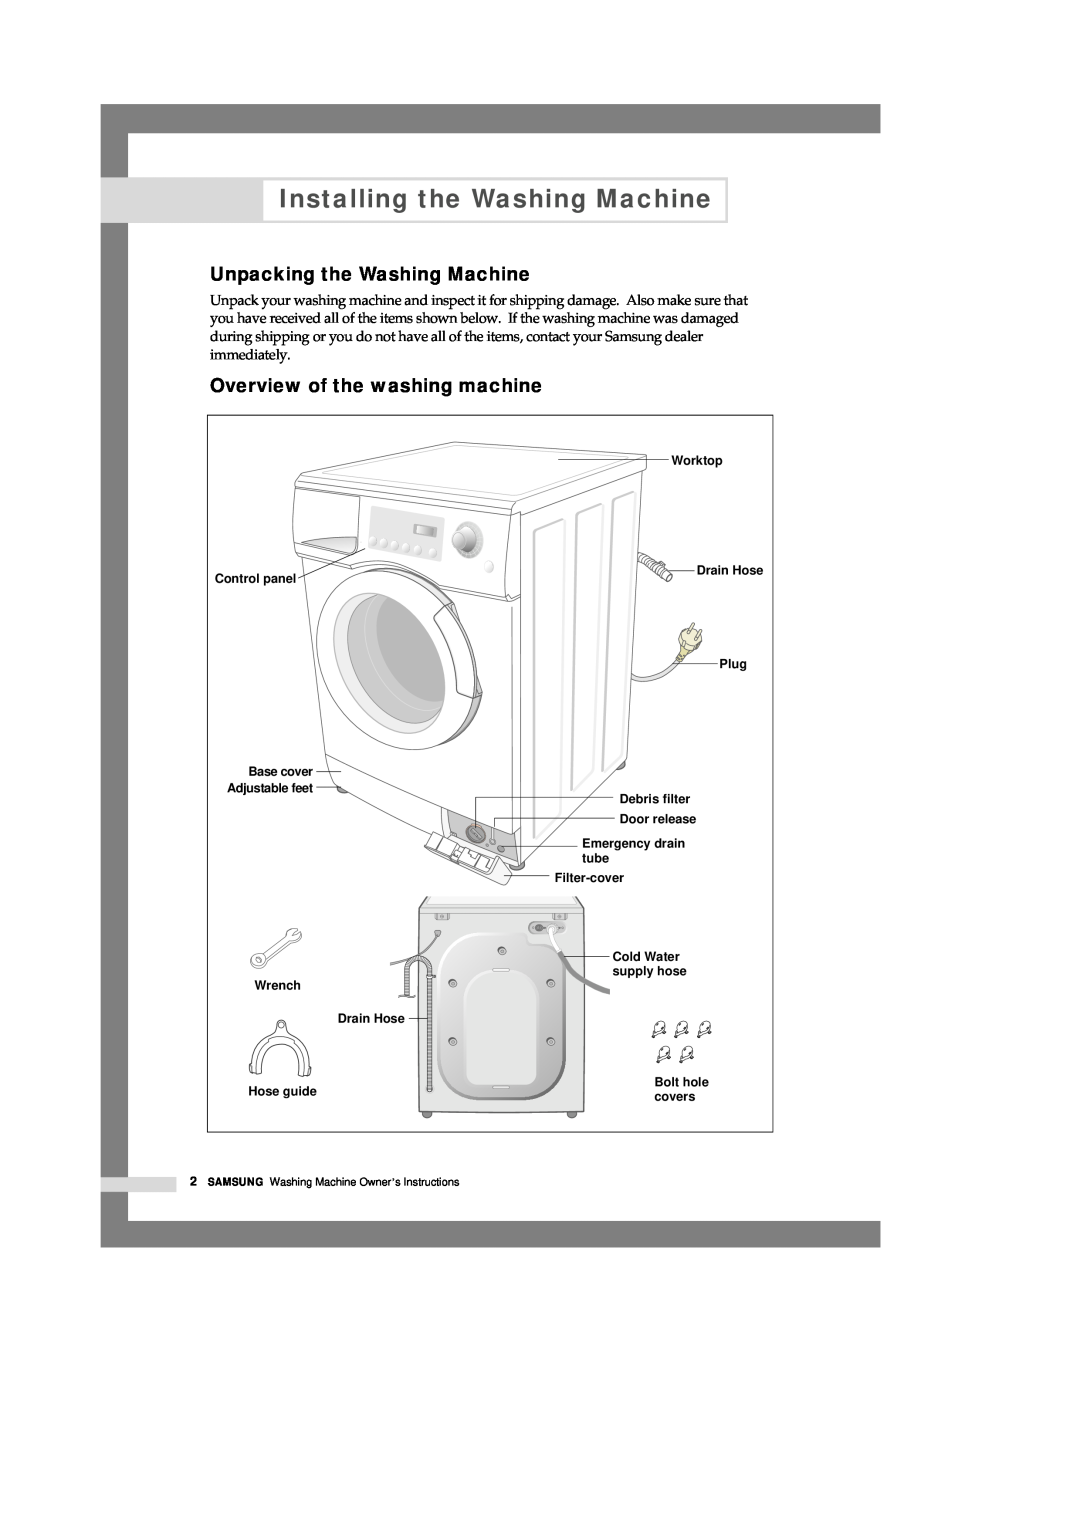 Samsung Q1633, Q1433, Q1233 Installing the Washing Machine, Unpacking the Washing Machine, Overview of the washing machine 